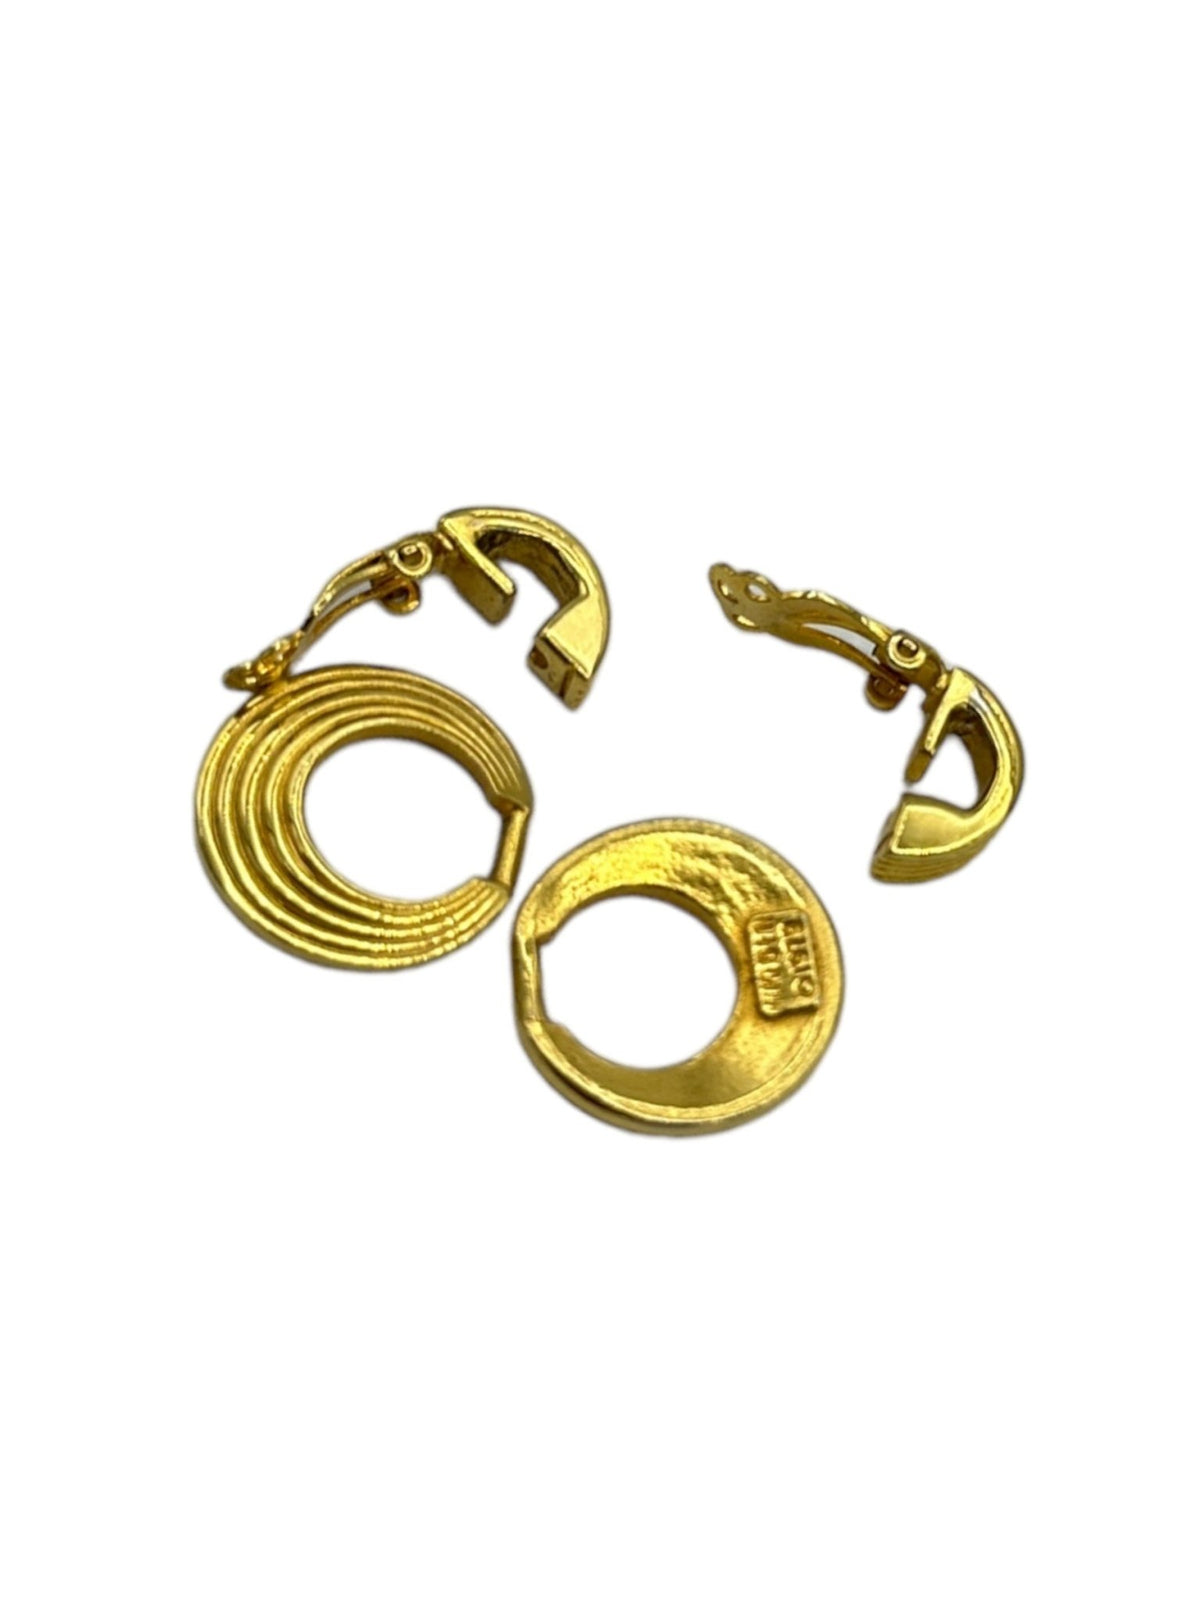 Gold Classic Door Knocker Hoop Clip-On Earrings by Mimi di N - 24 Wishes Vintage Jewelry